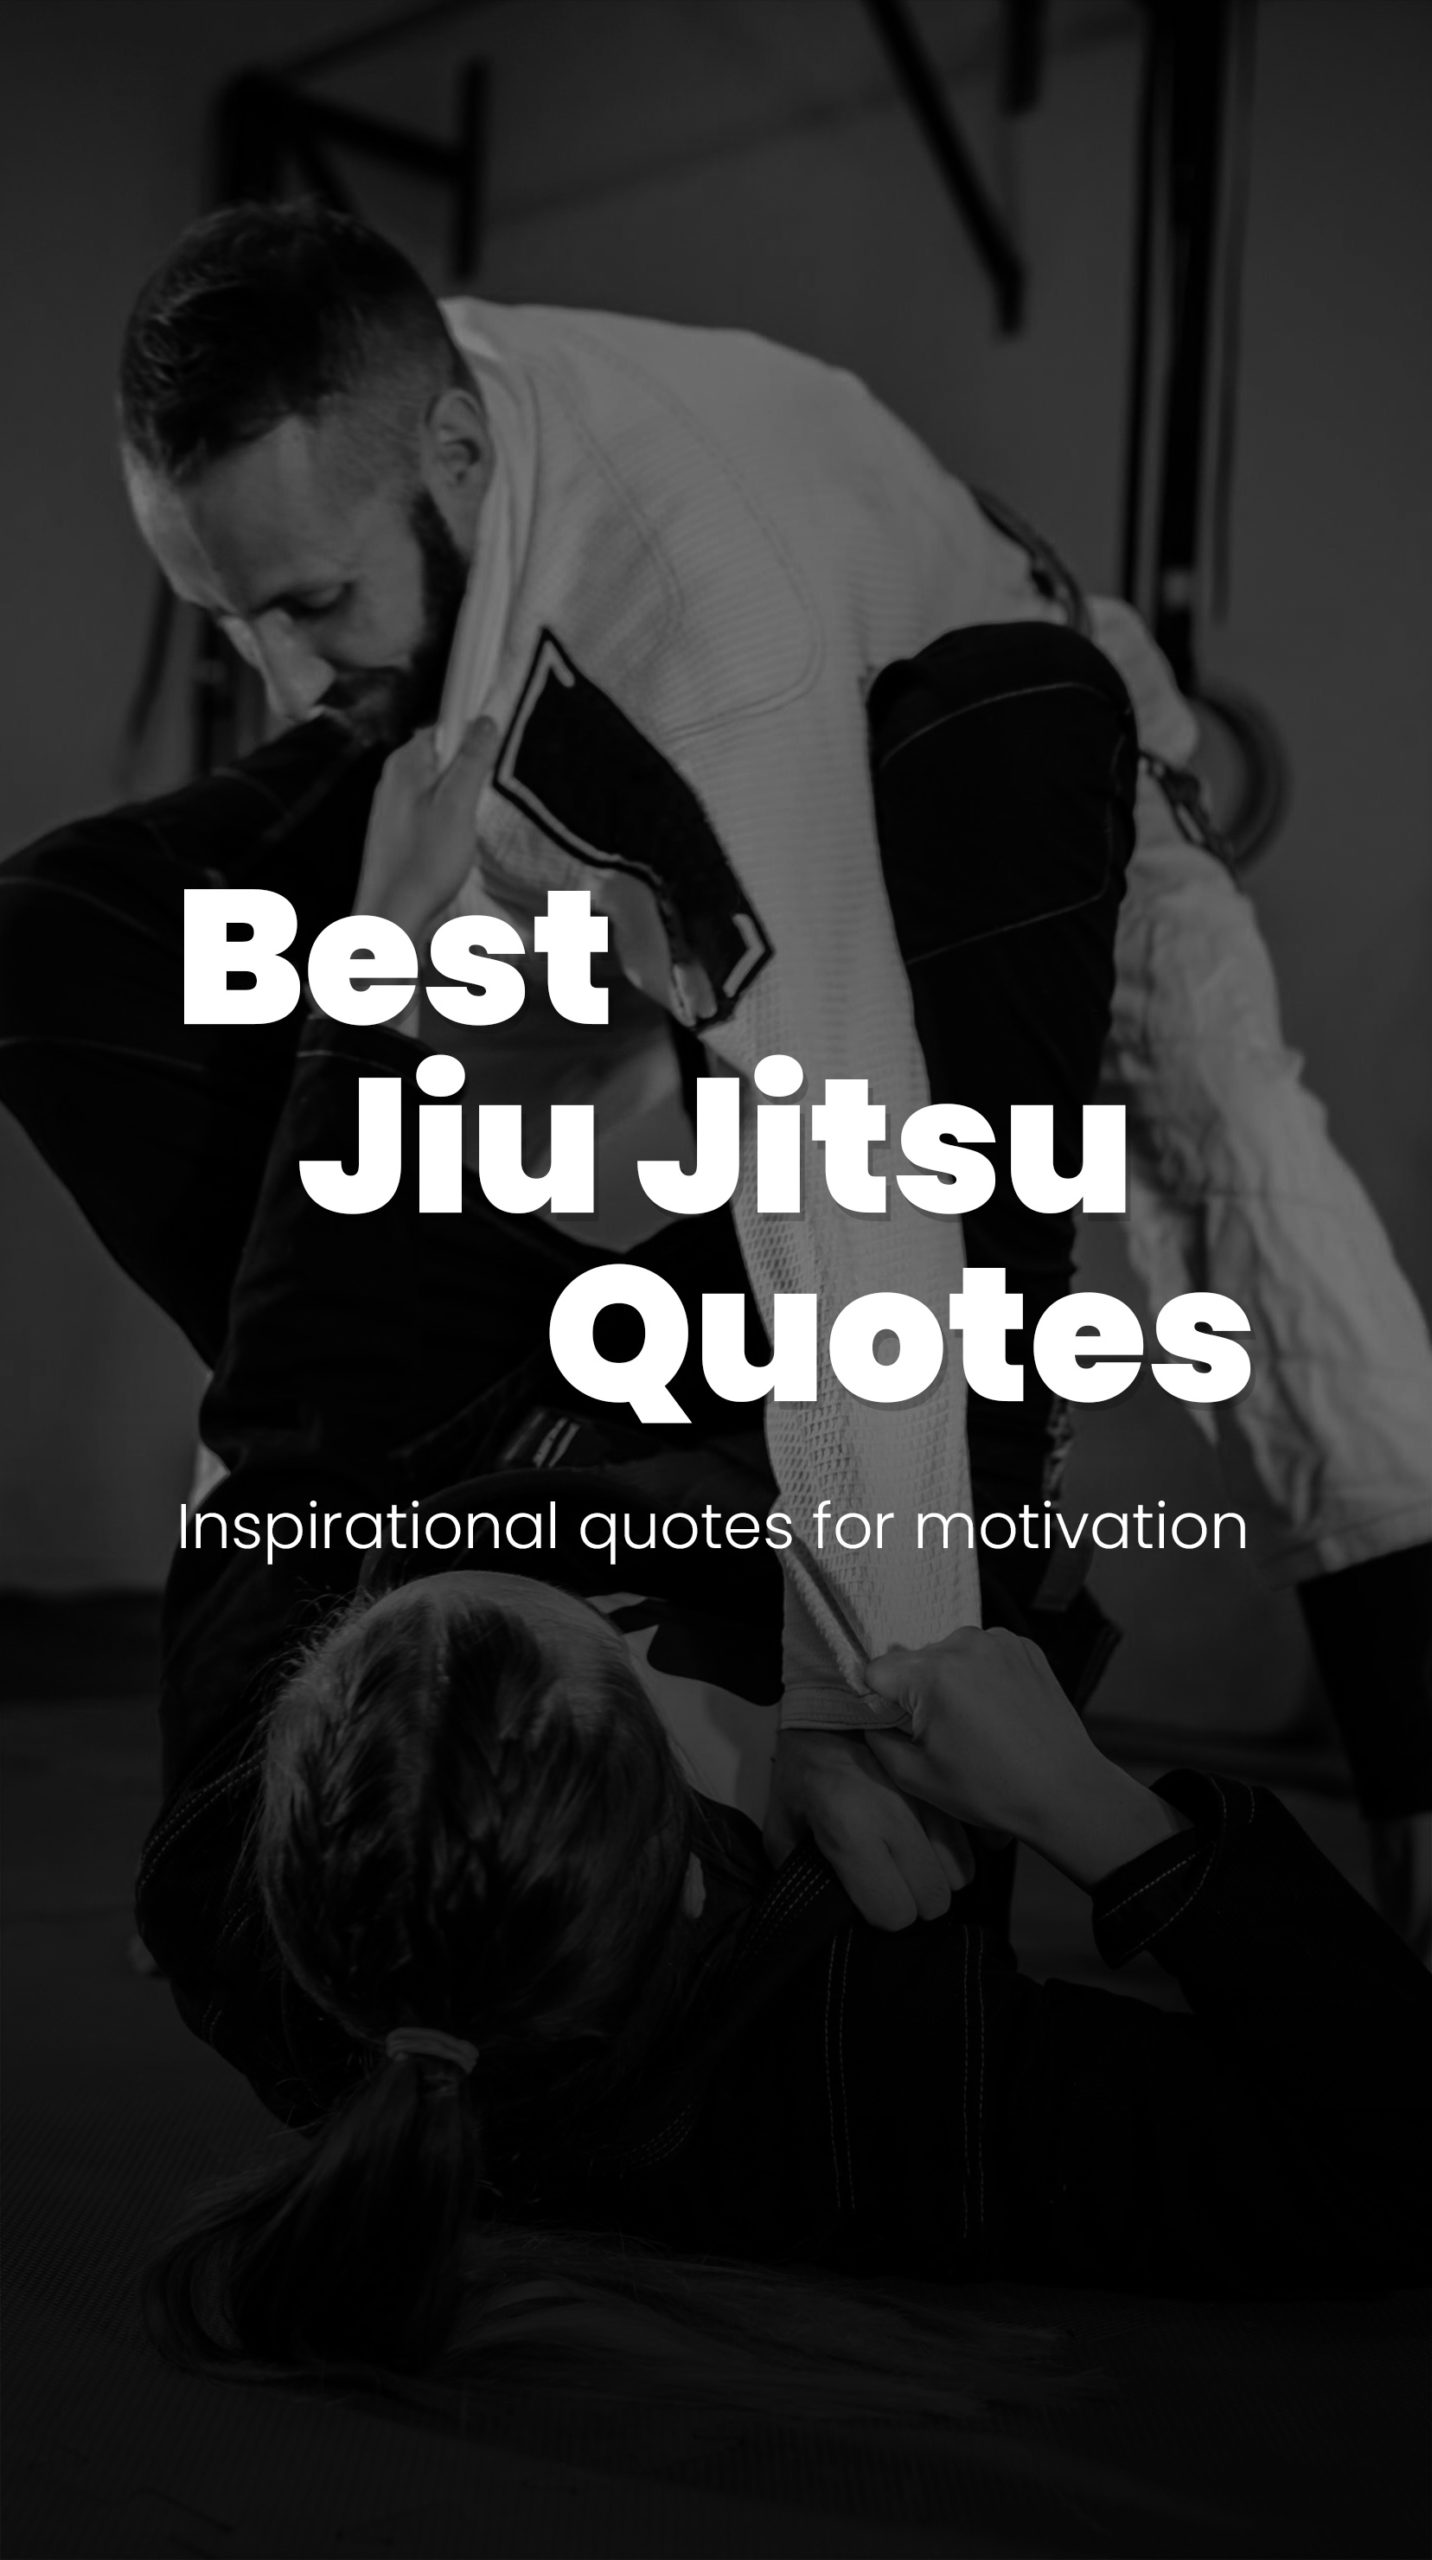 The 37 Best Jiu Jitsu Quotes: Famous, Inspirational & Funny